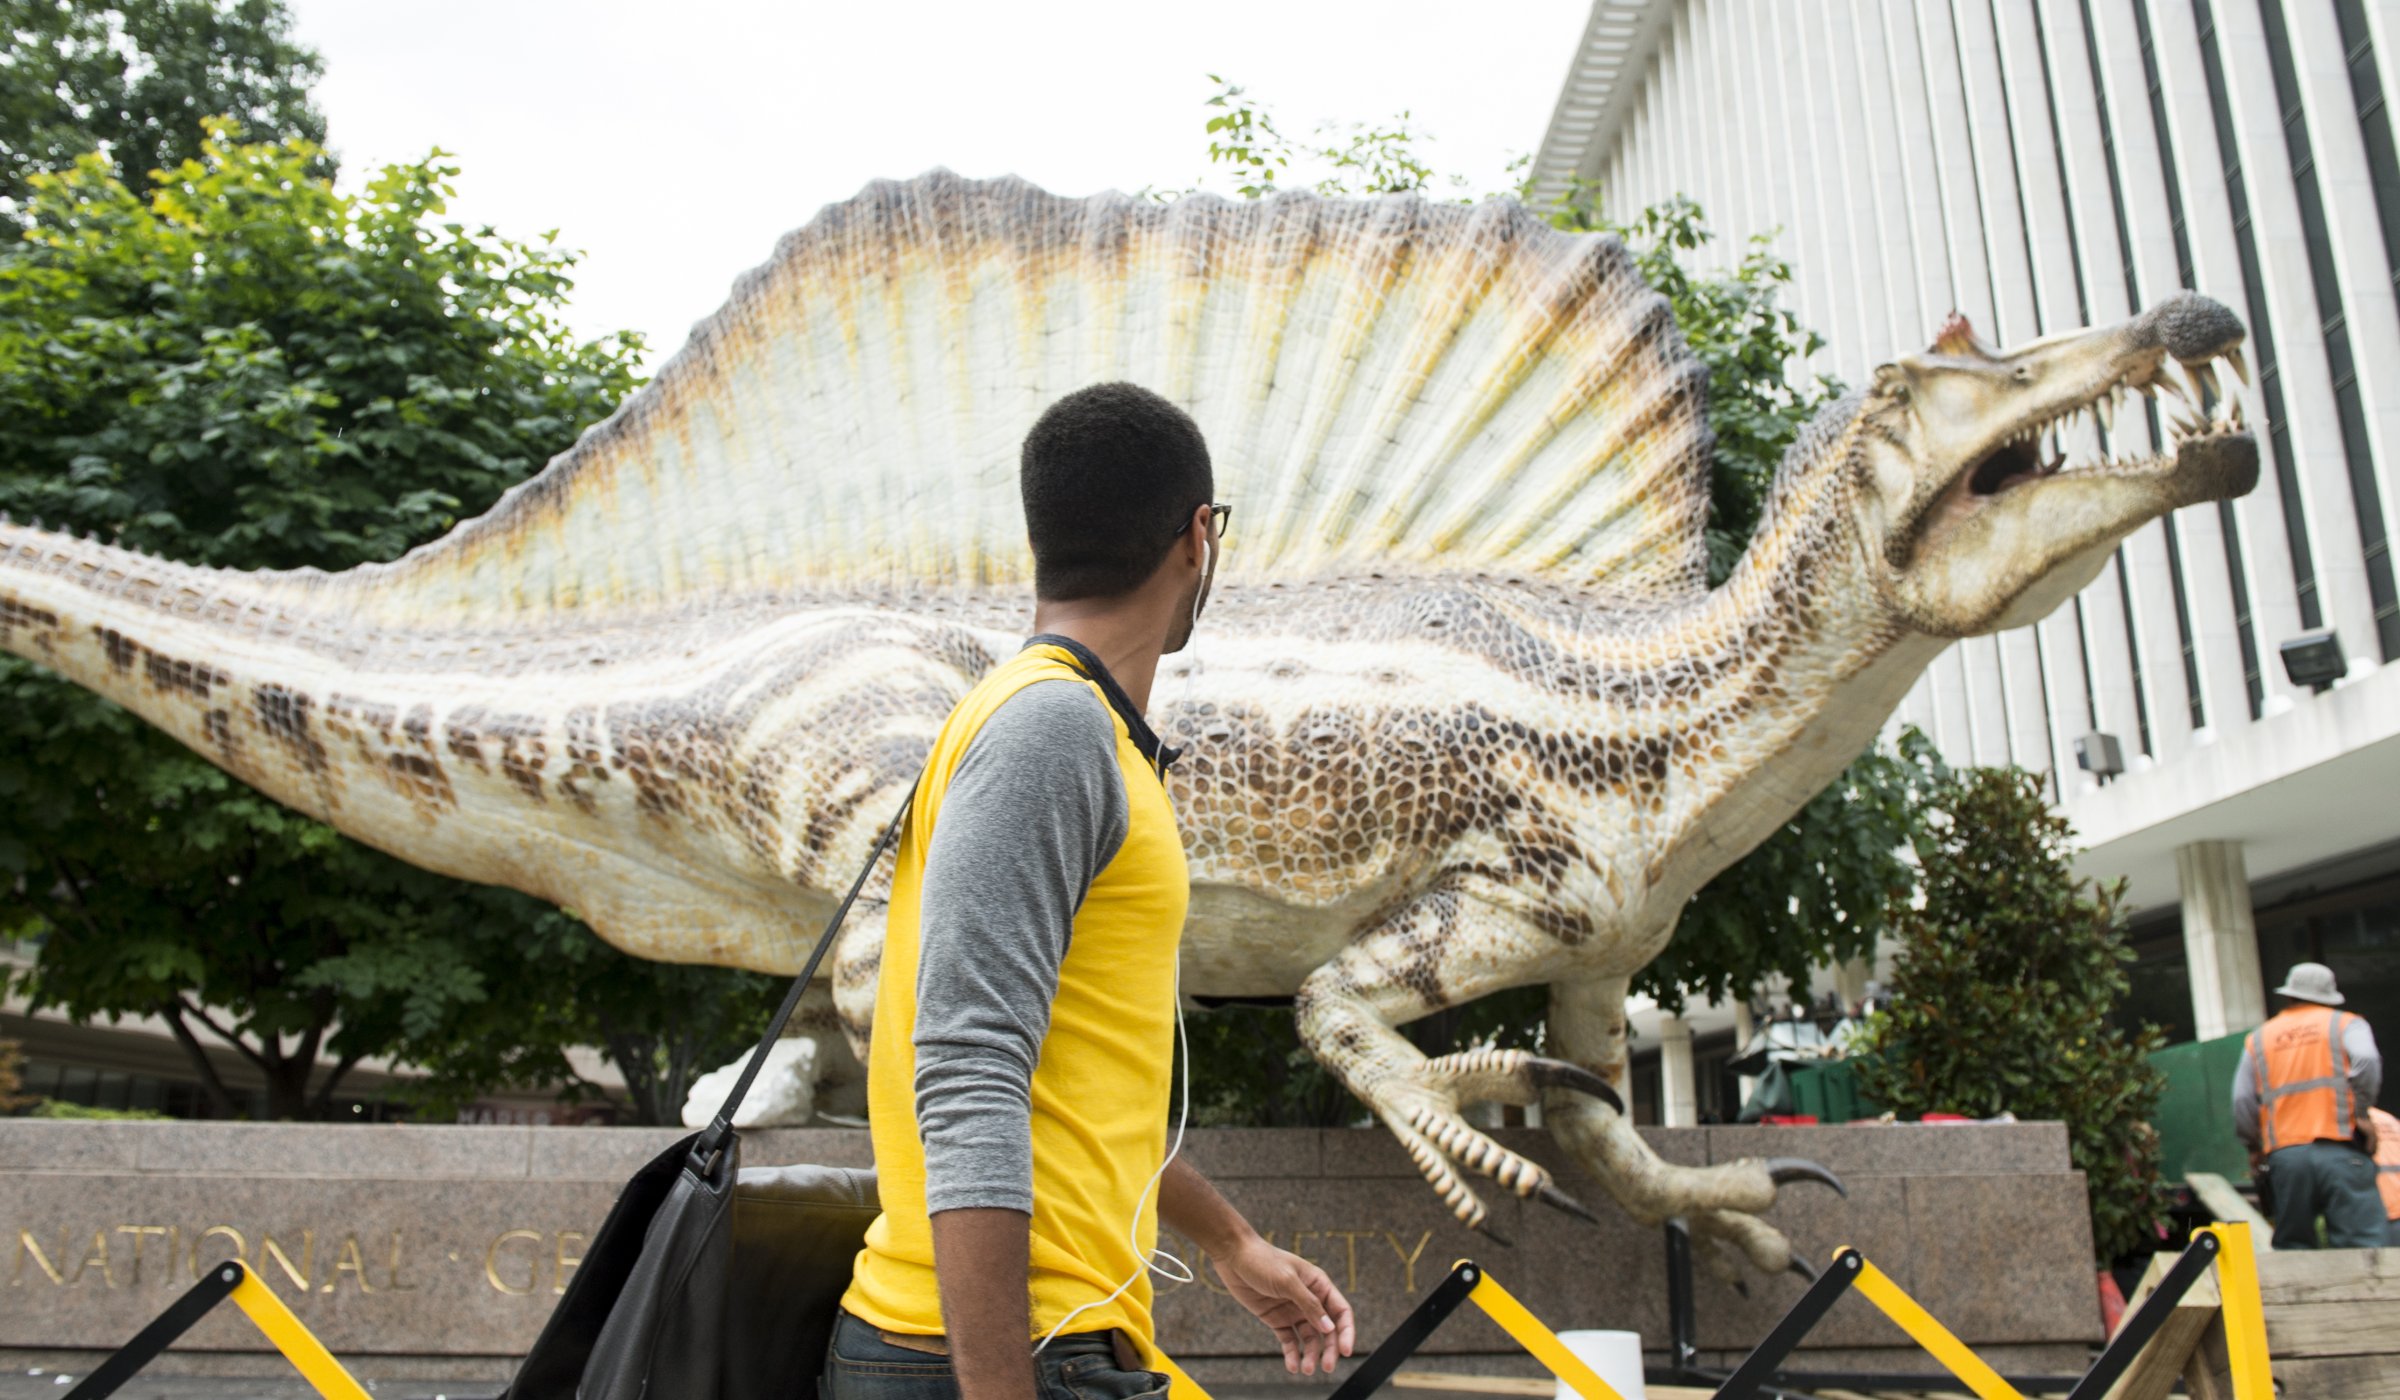 Spinosaurus at National Geographic